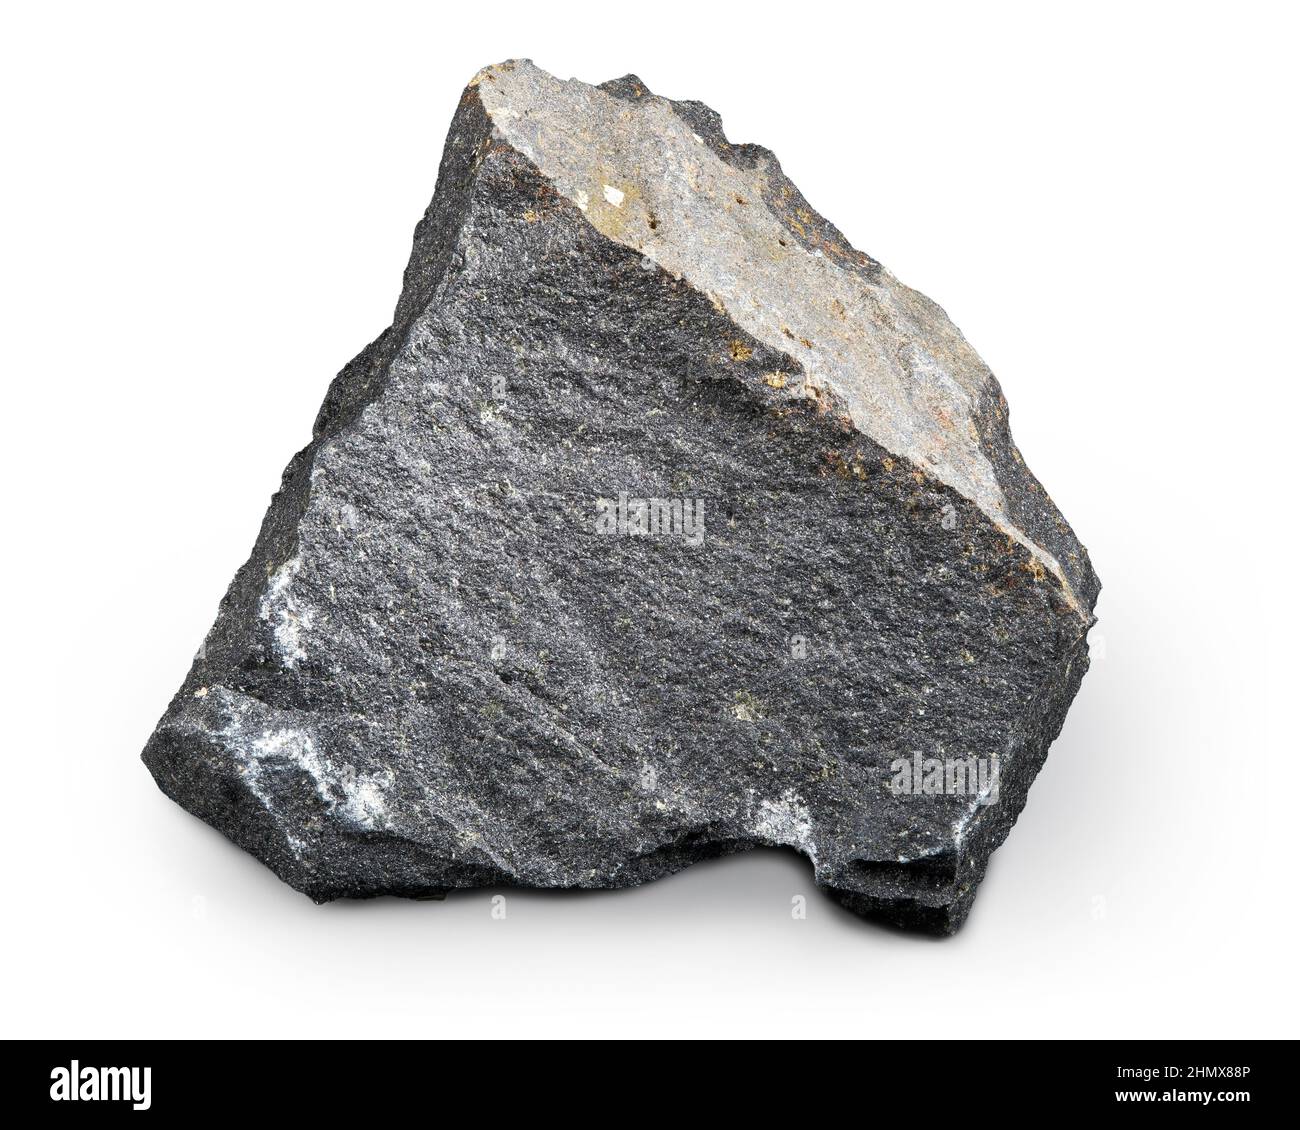 El basalto (roca ígnea) Foto de stock